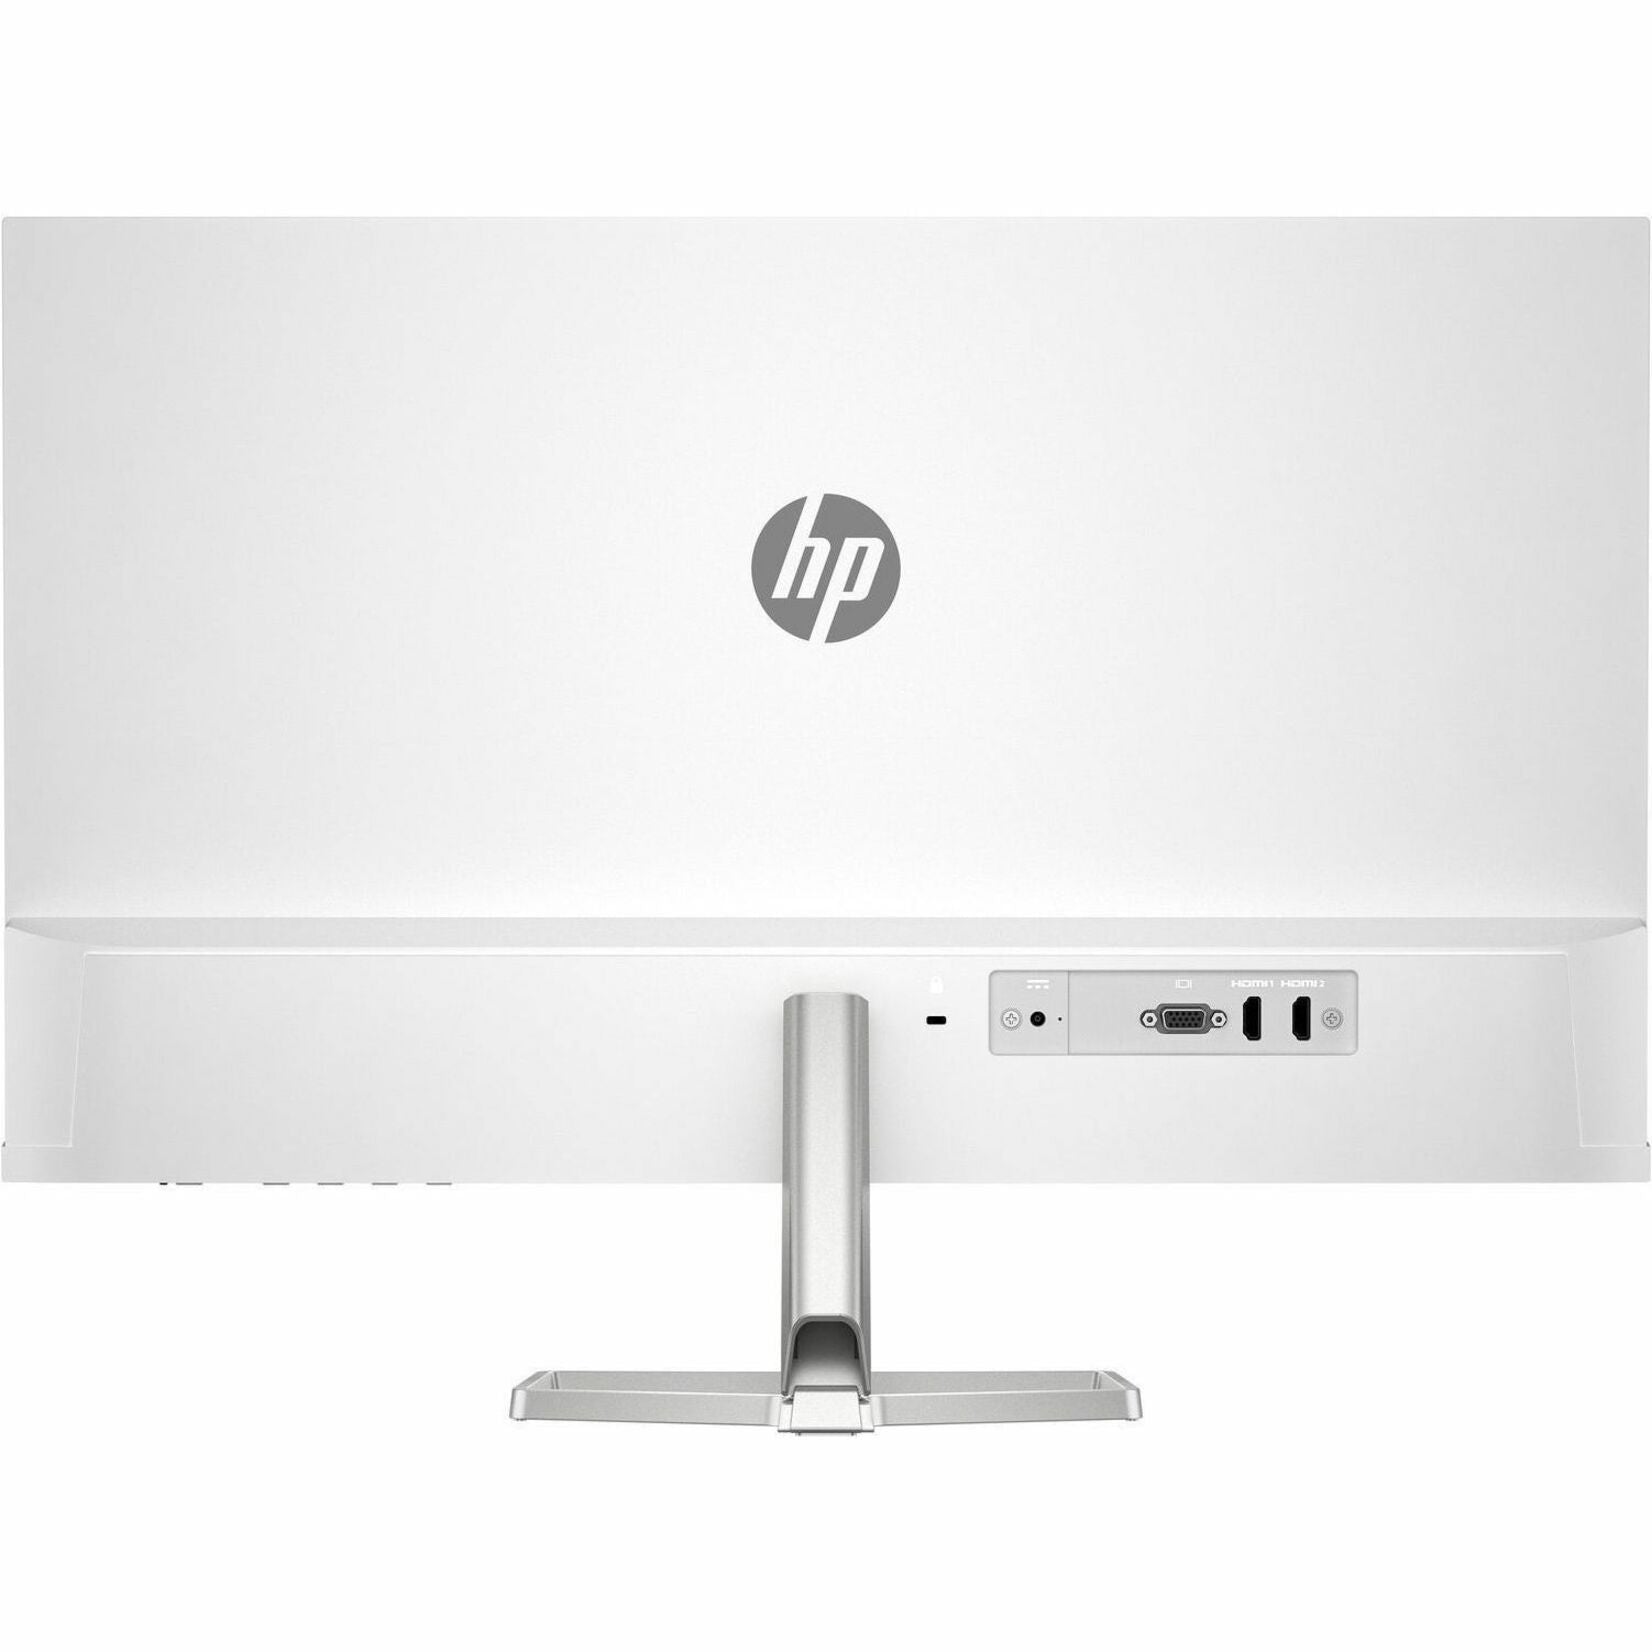 HP 527sw 27" Class Full HD LED Monitor - 16:9 - White (94F46AA#ABA)